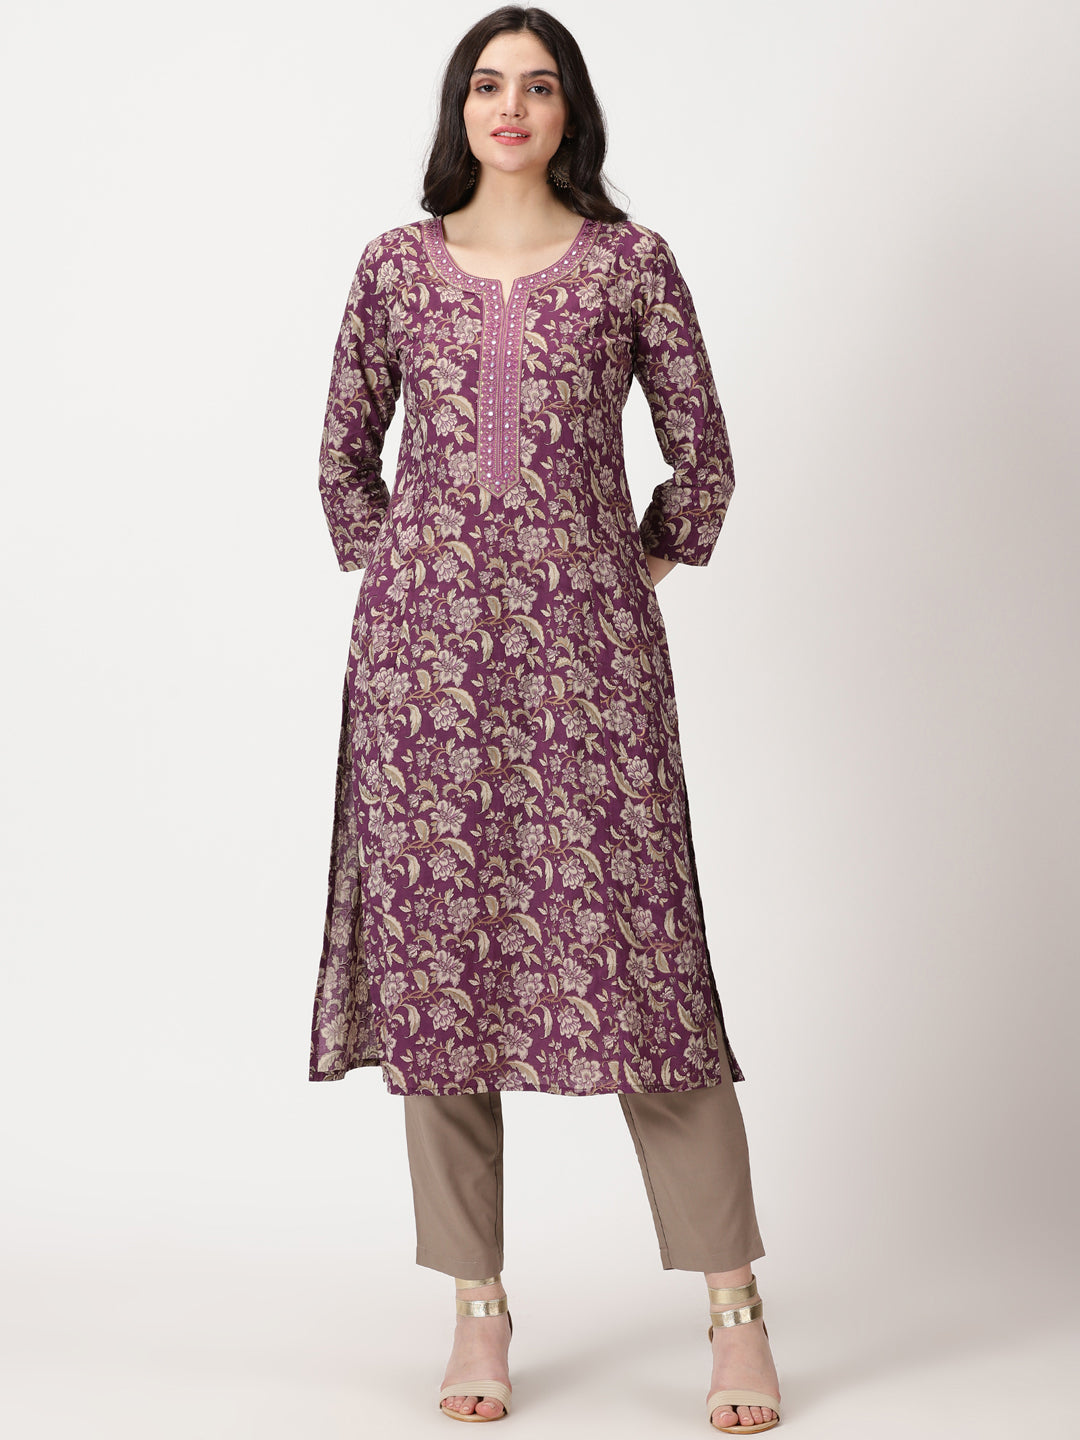 Purple Ethnic Floral Print Cotton Kurta with Mirror Neck Embroidery